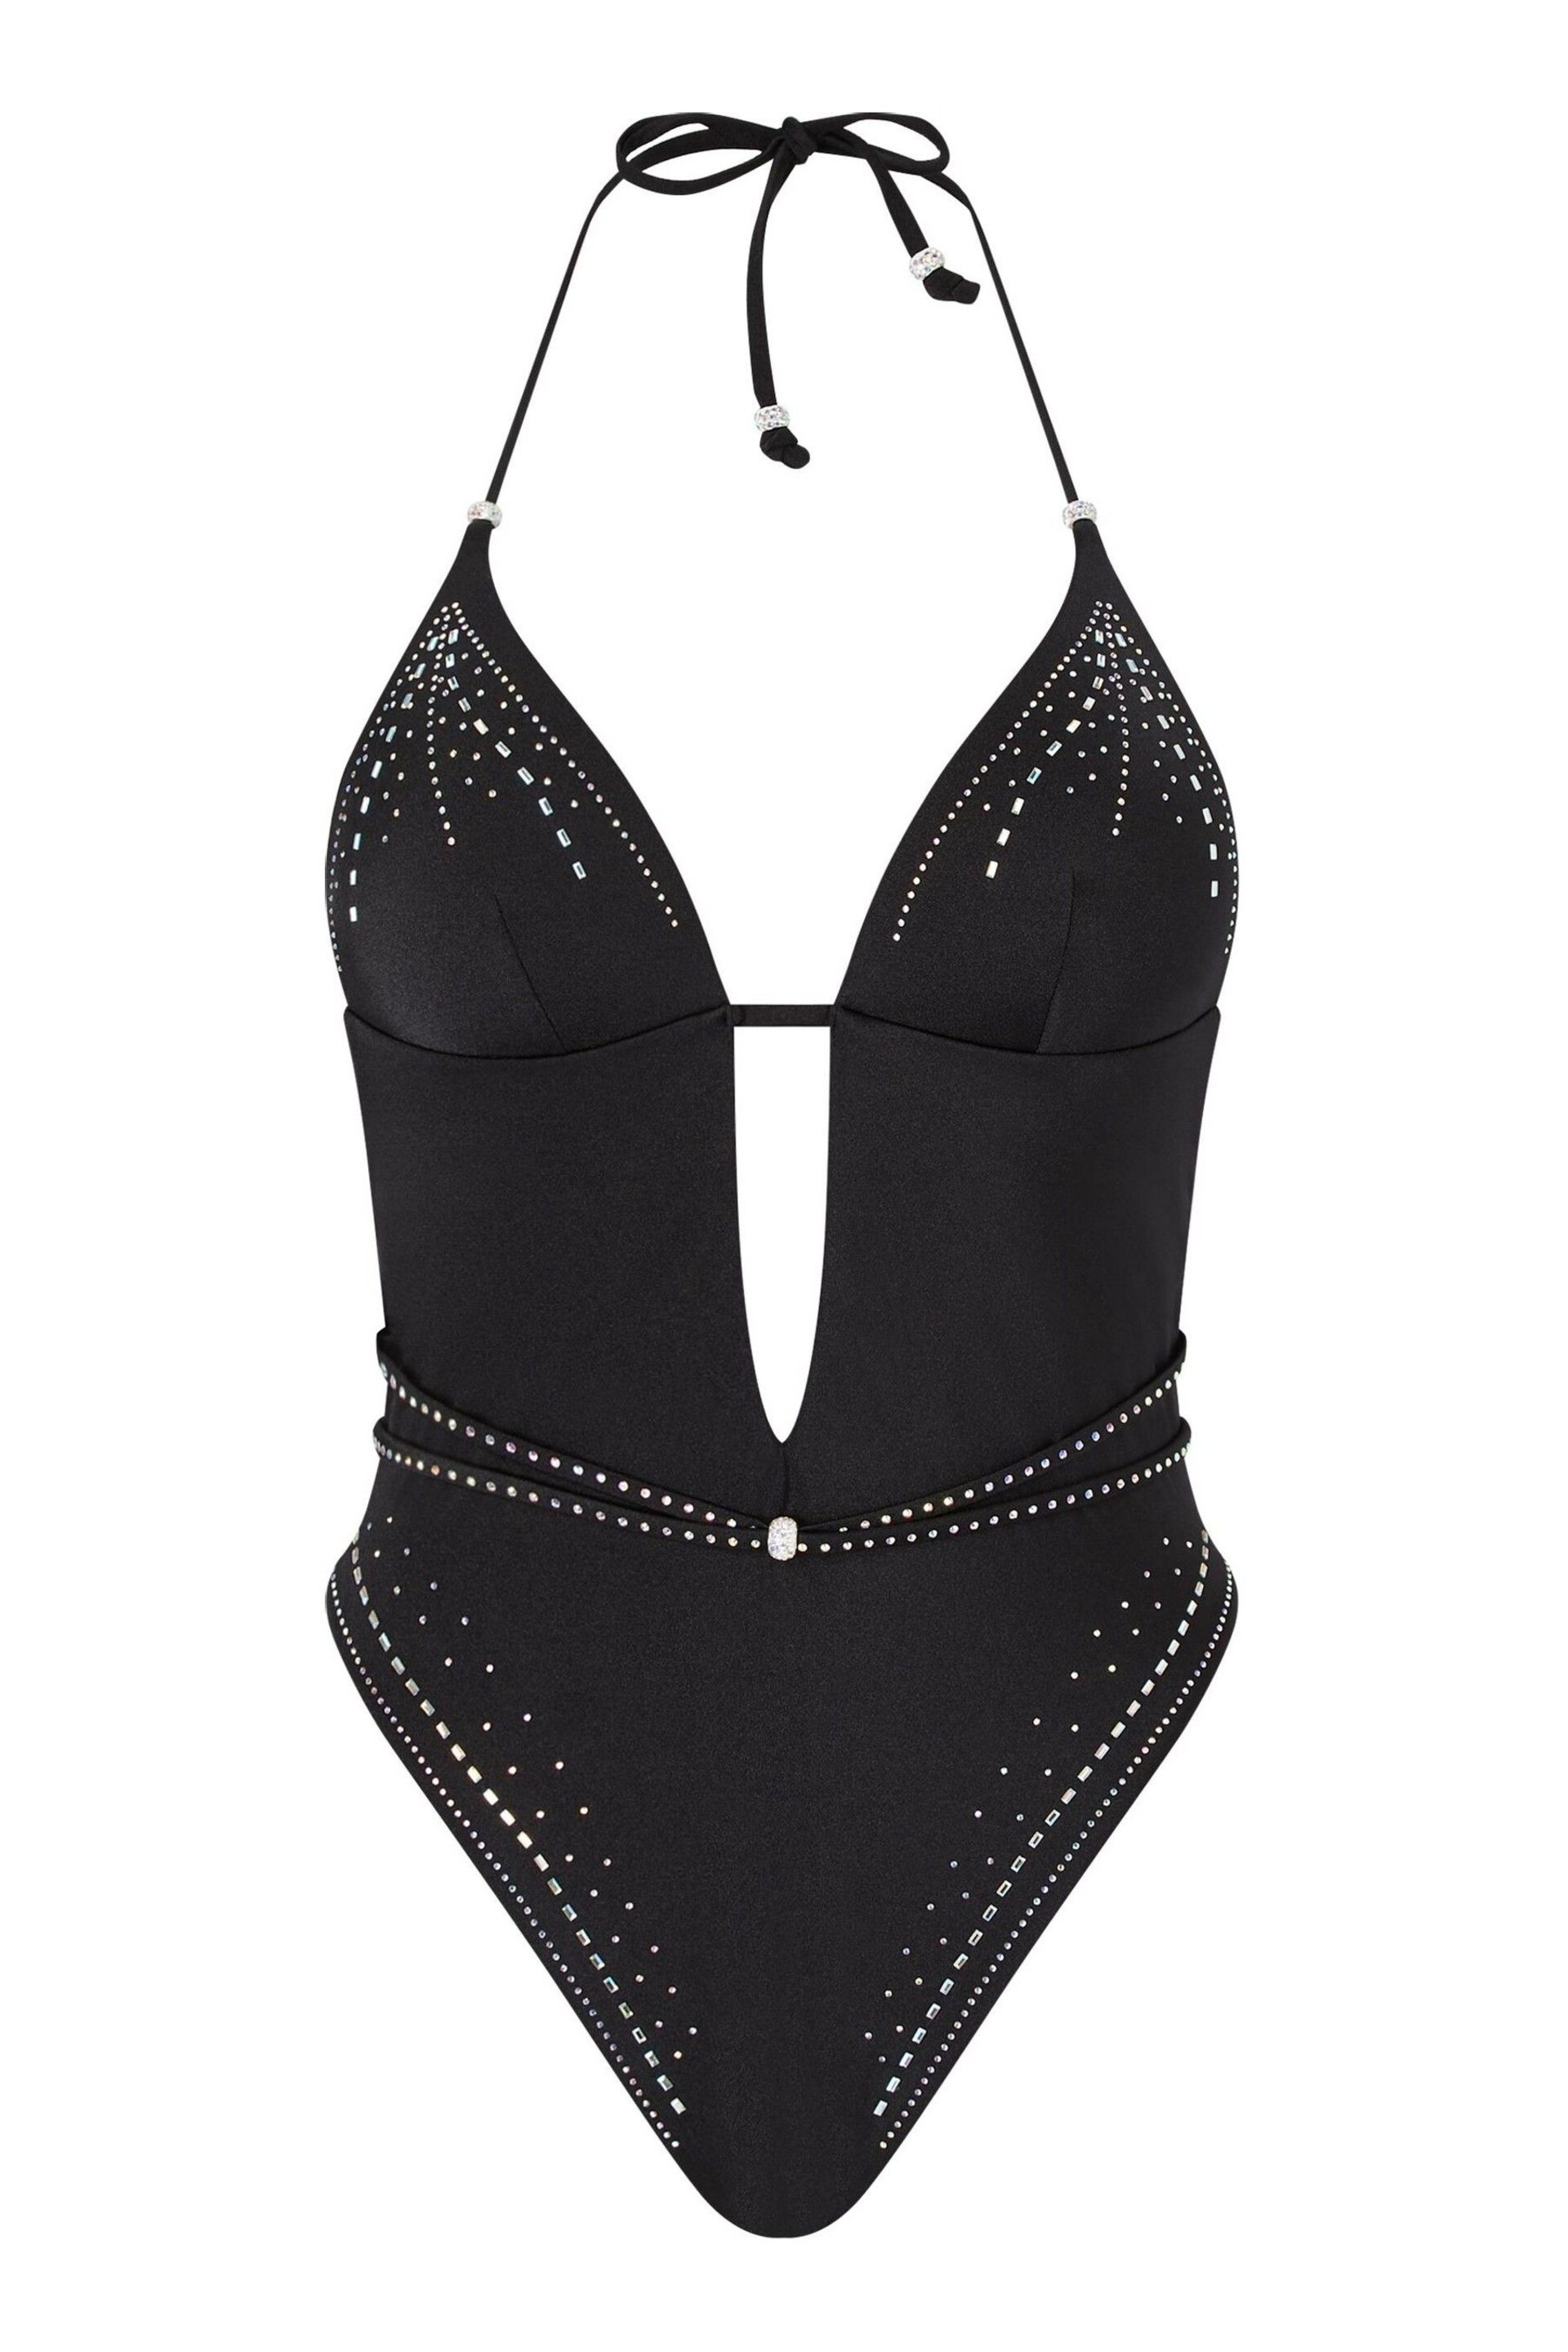 Ann Summers Black Summer Siren Soft Swimsuit - Image 4 of 4